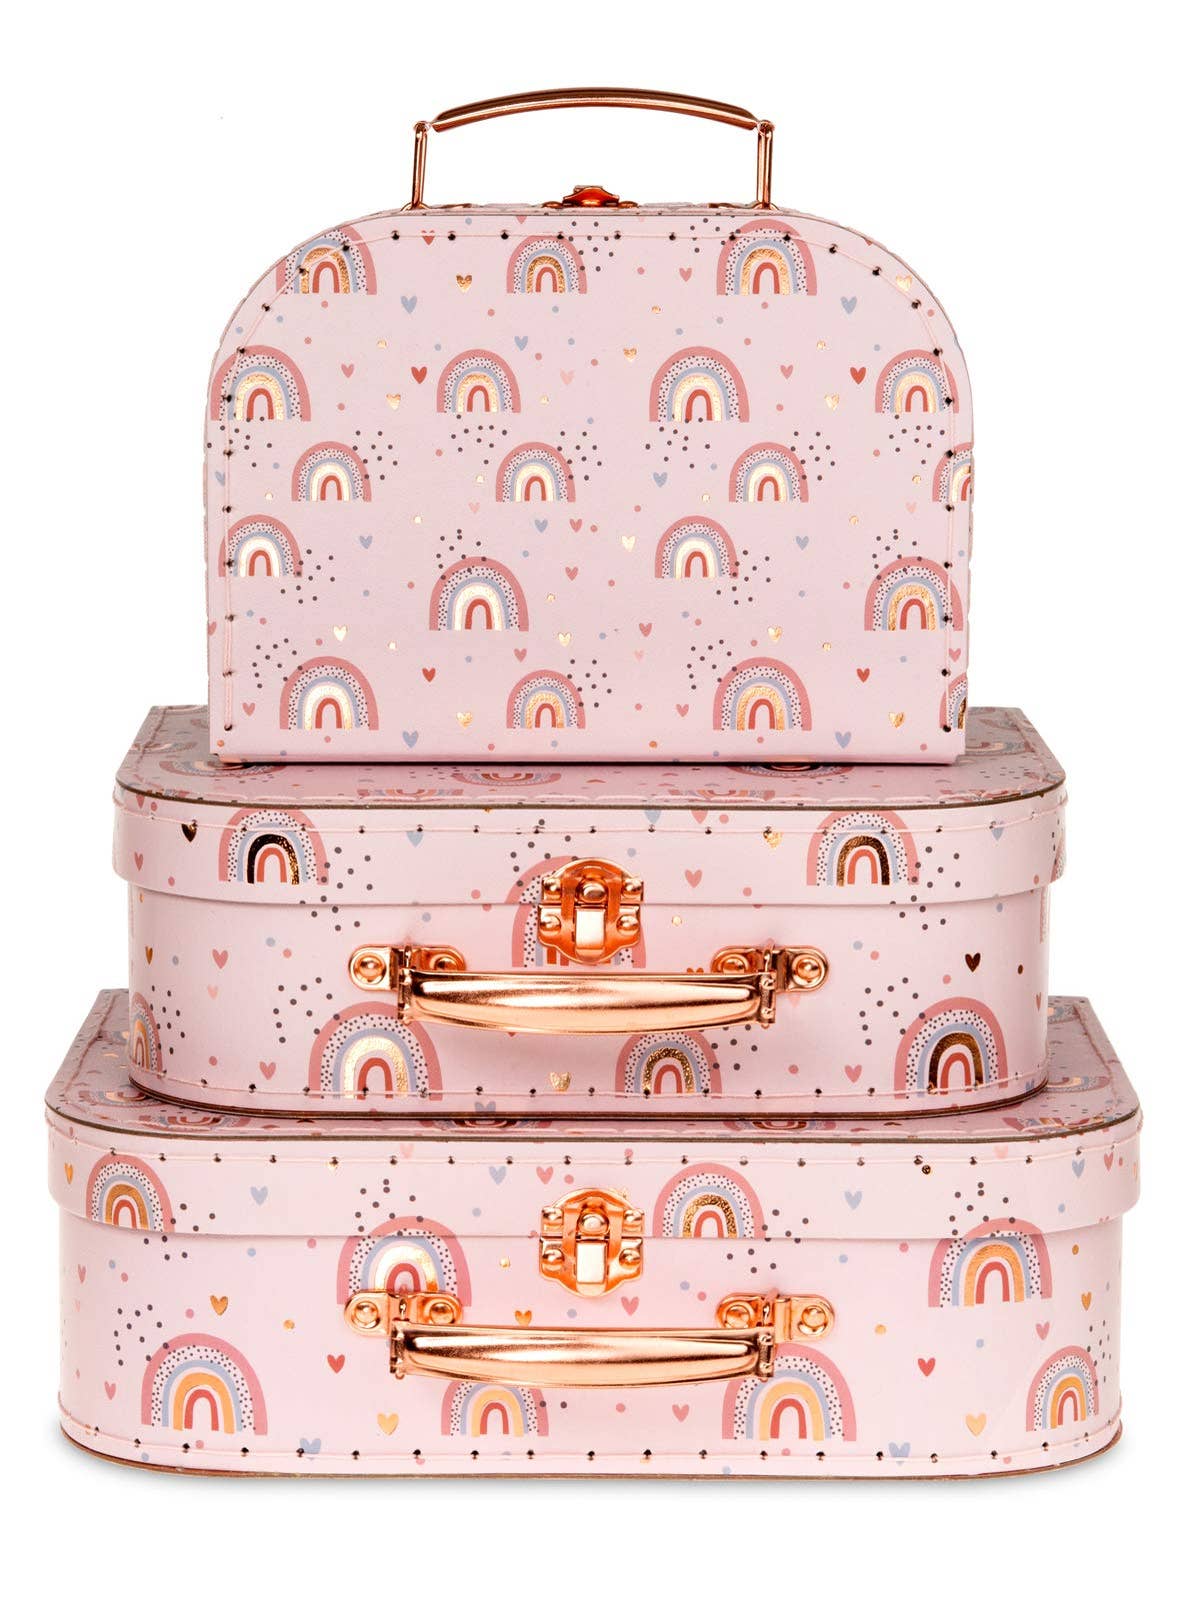 Set of 3 Suitcases - Boho Rainbow - Twinkle Twinkle Little One